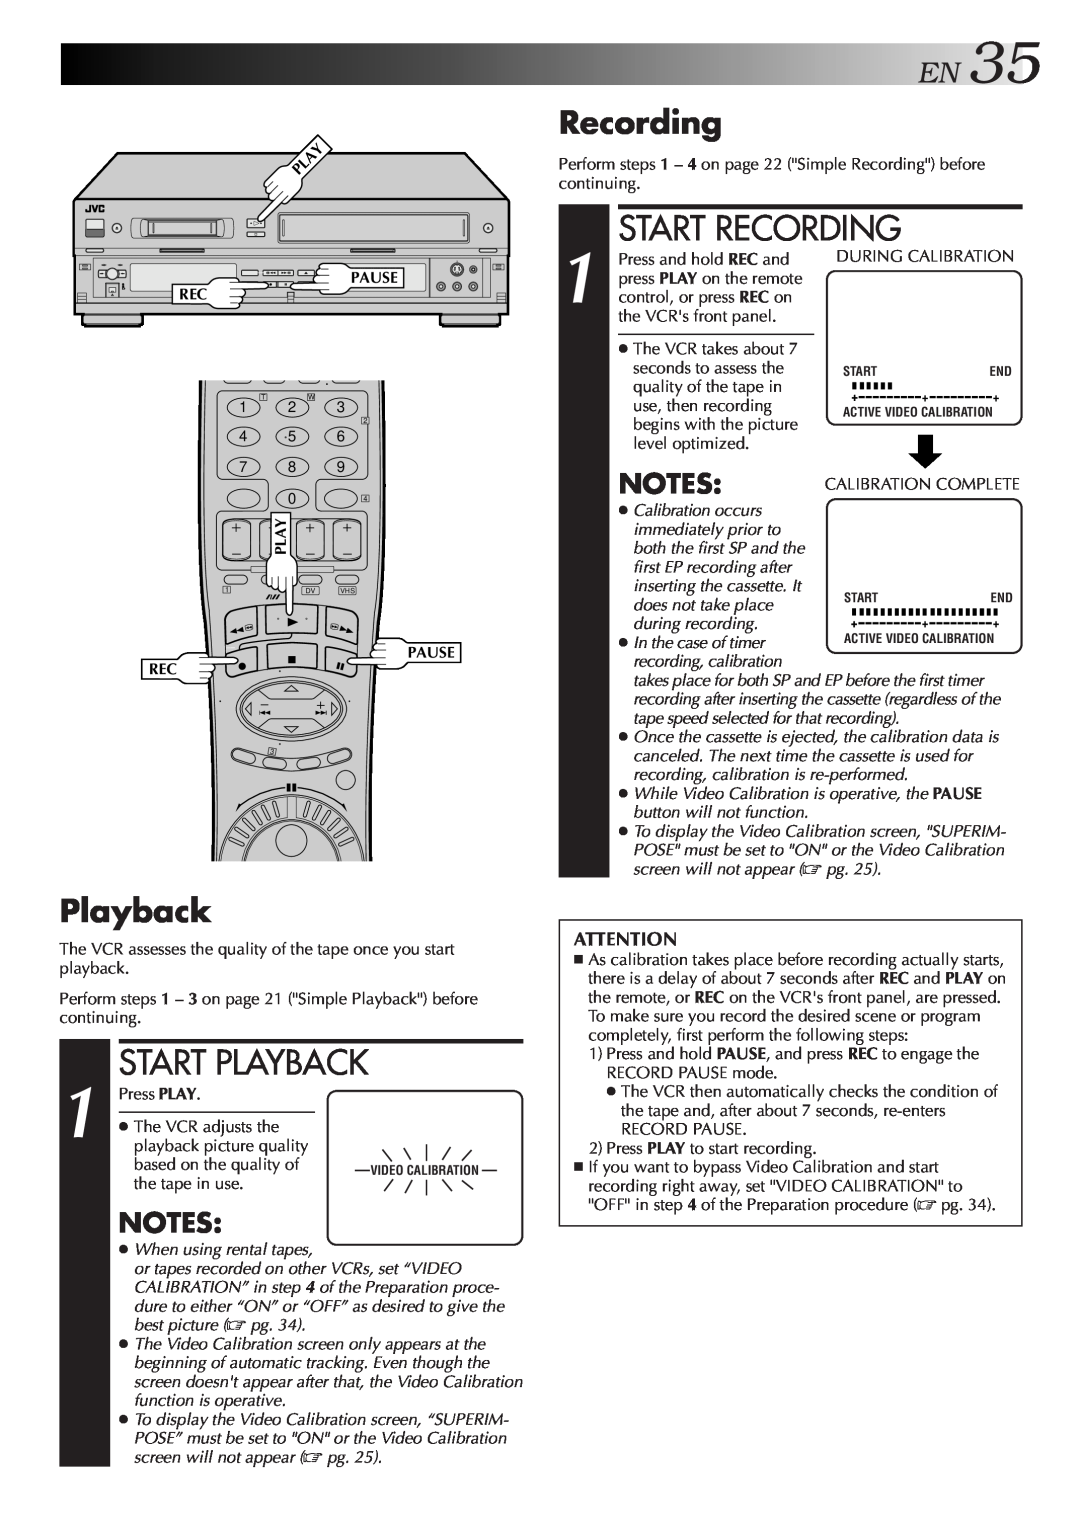 JVC SR-VS10U manual EN35, Start Playback, Start Recording, Notes 